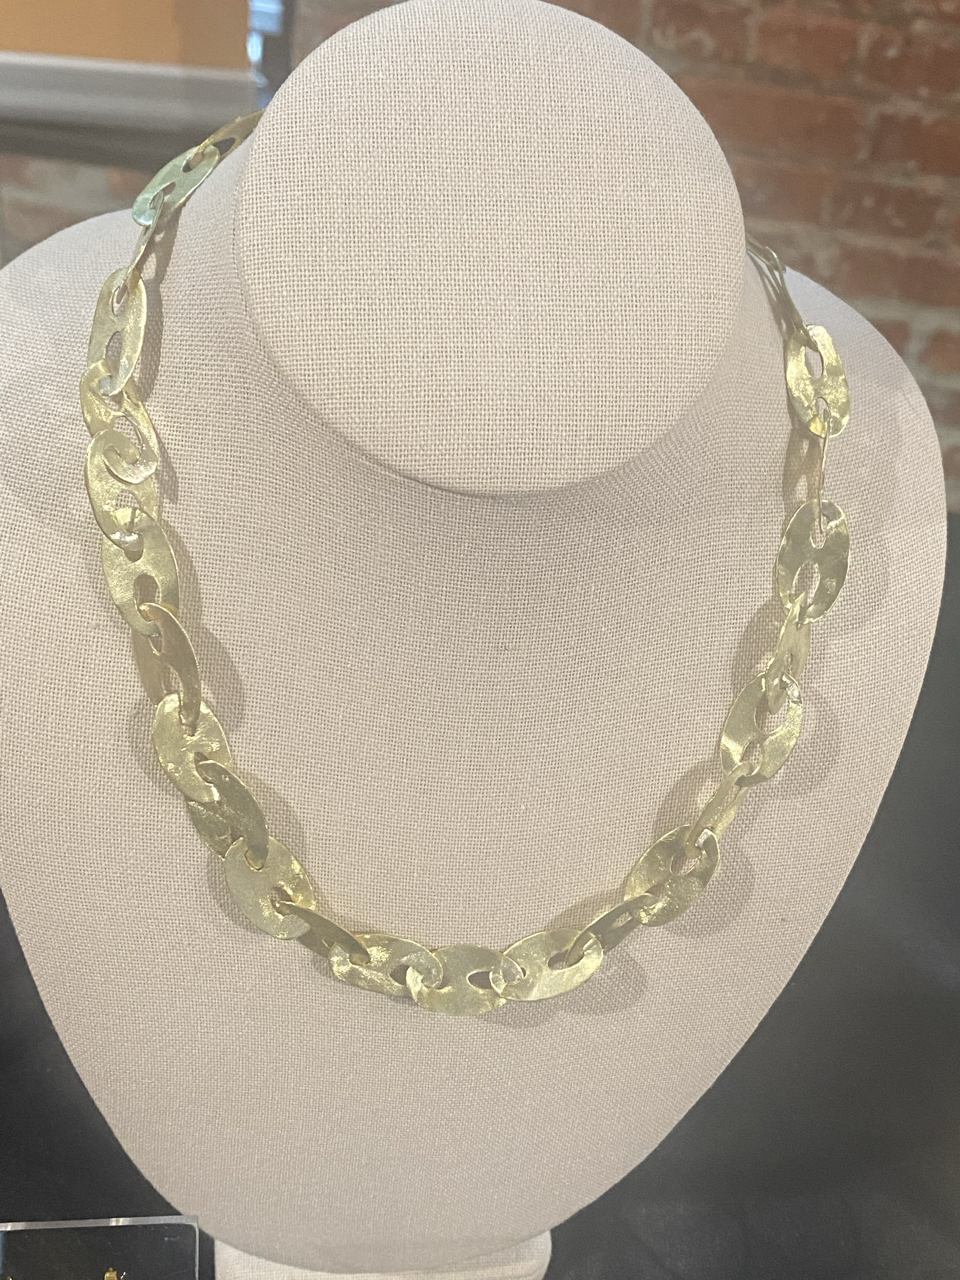 Lynx Gold Necklace Chain, Handmade Oval Lynx Chain